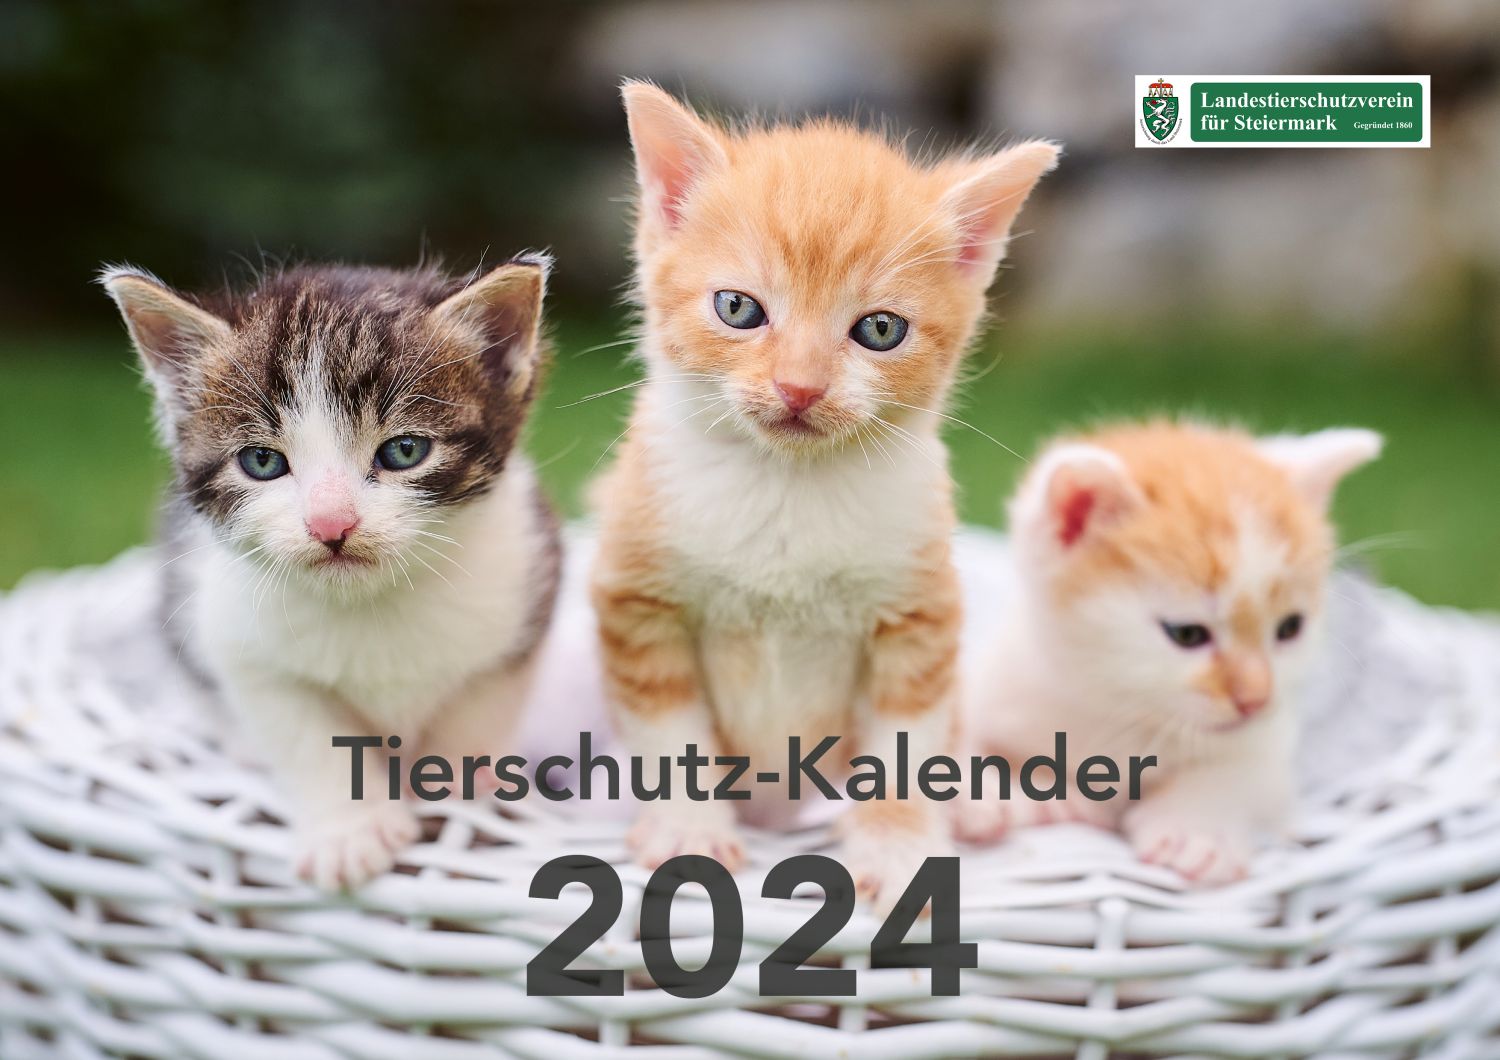 Tierschutz-Kalender 2024